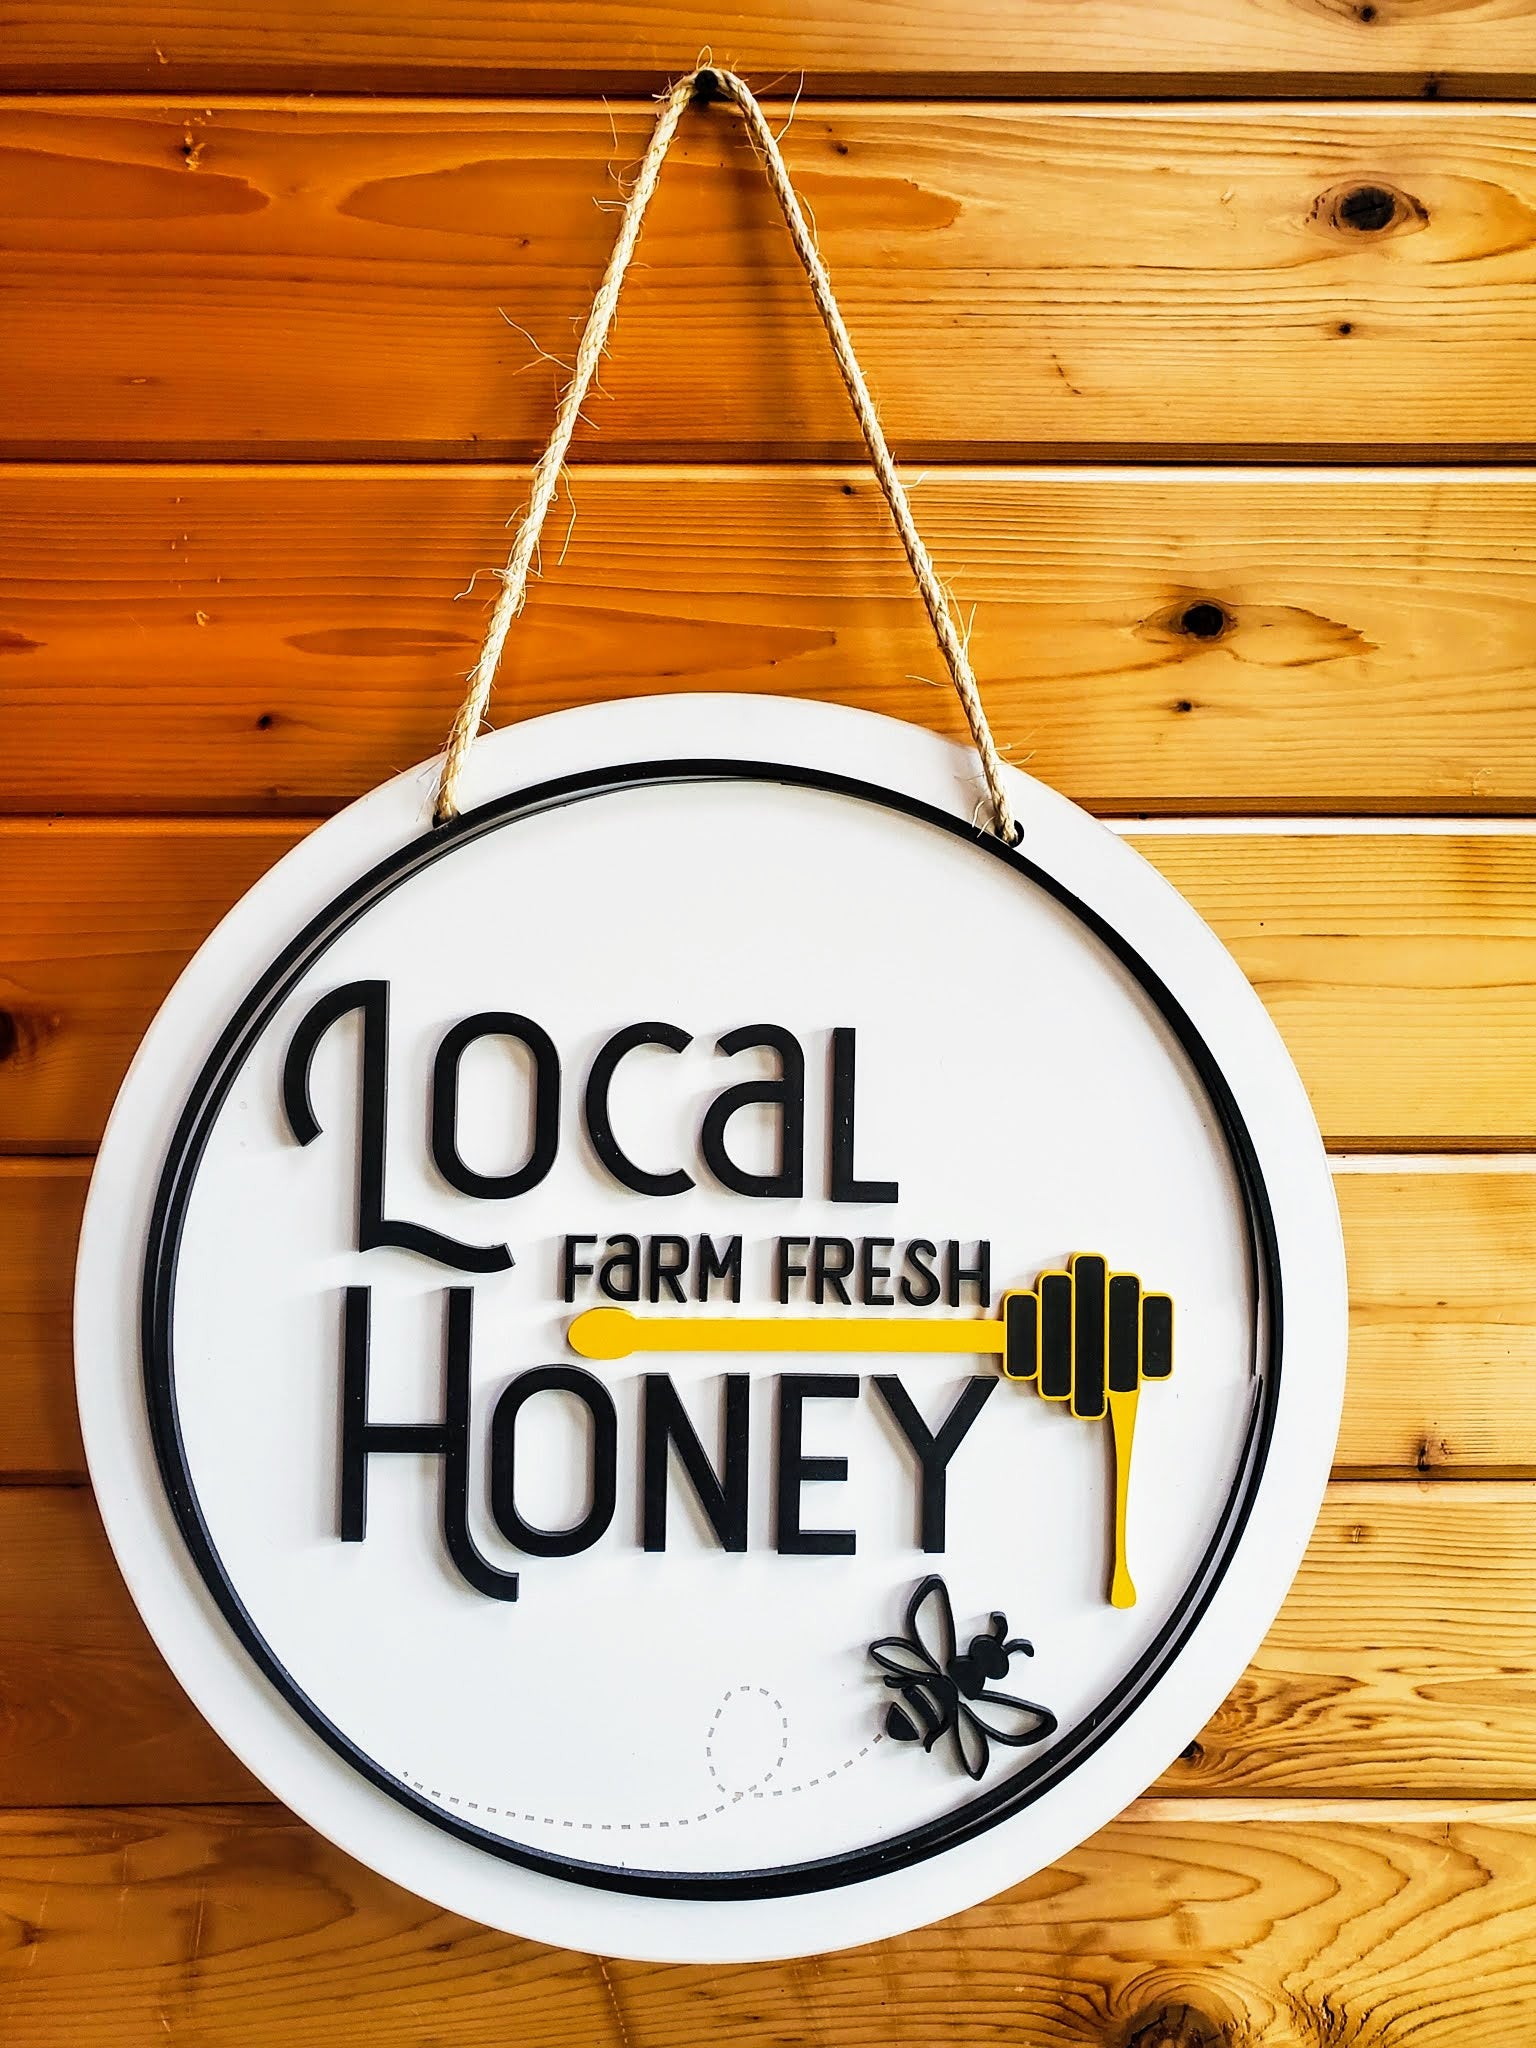 Bee Decor | Bee Honey Decor | Round Sign | Summer Decor | Local Farm Fresh Honey Sign